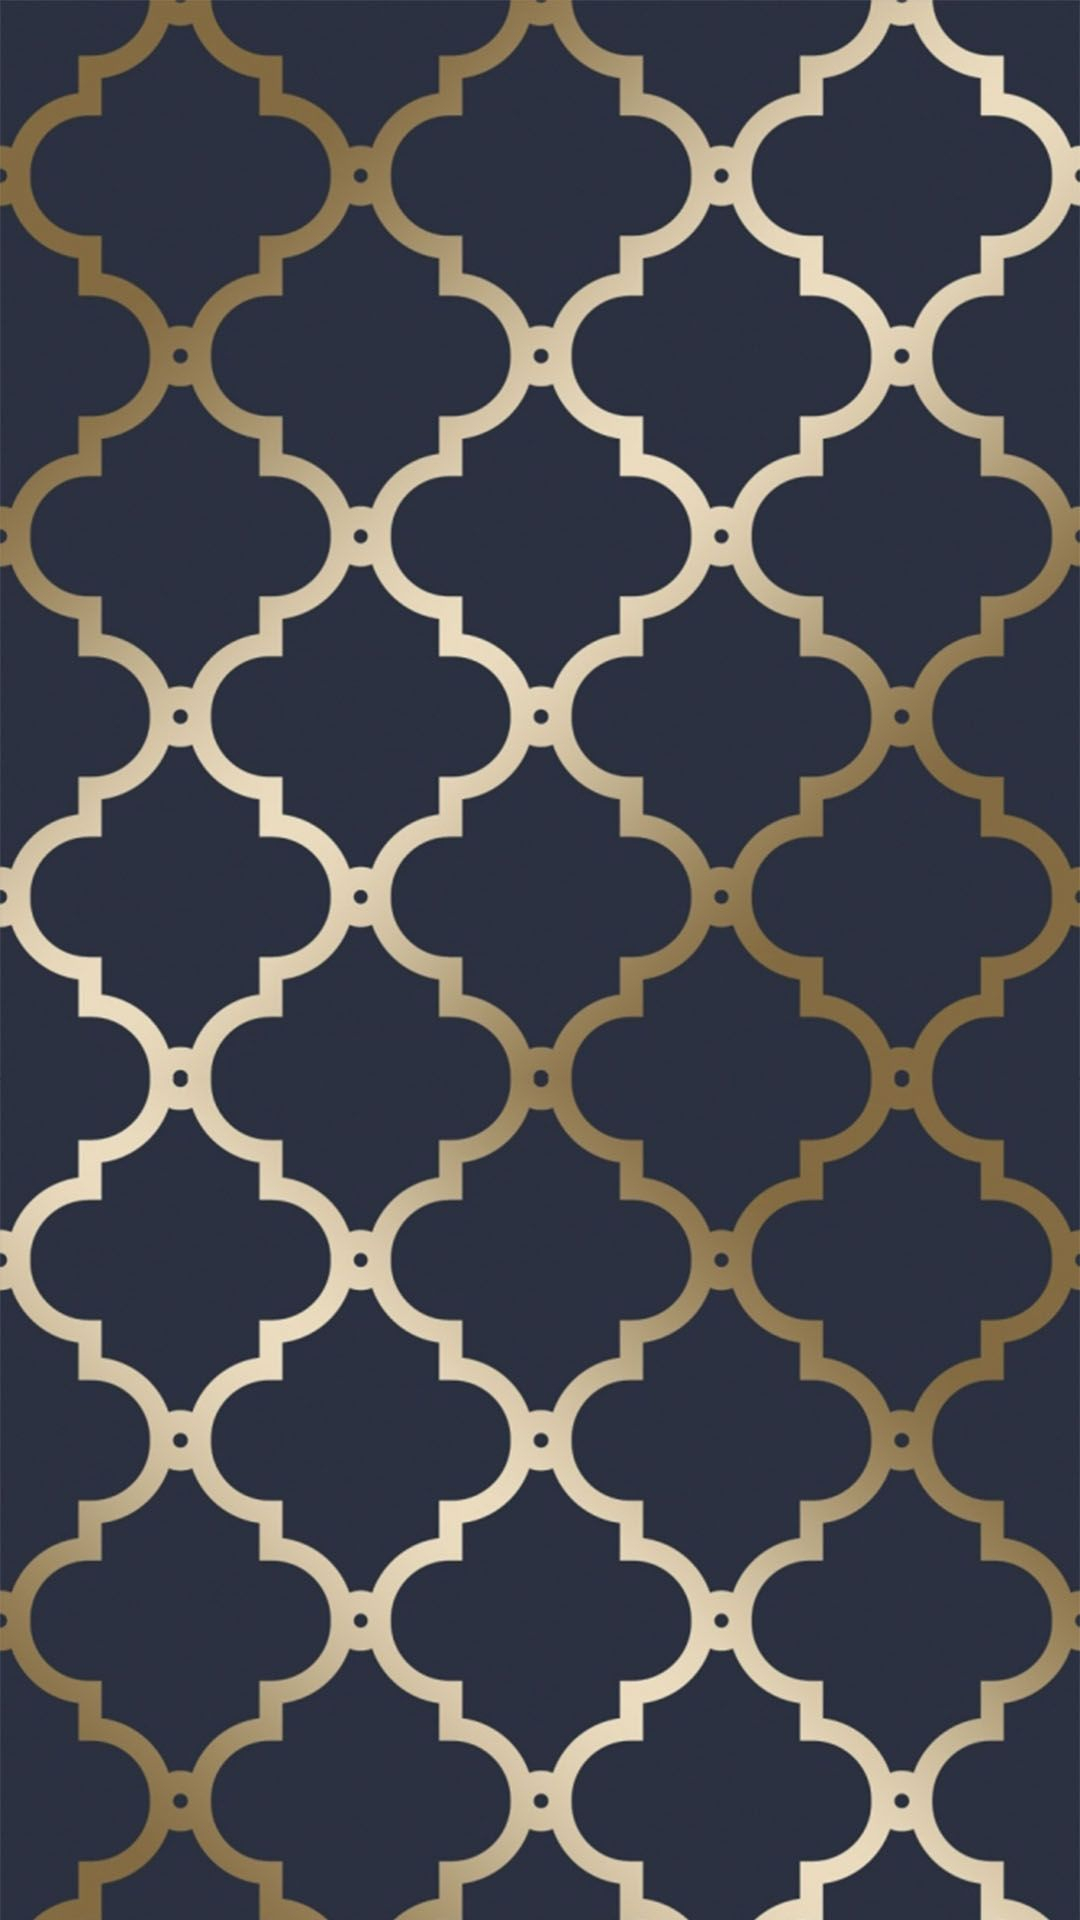 1080x1920 Morocco Trellis wallpaper in navy \u0026 gold | Trellis wallpaper, Art deco wallpaper, Blue and gold wallpaper